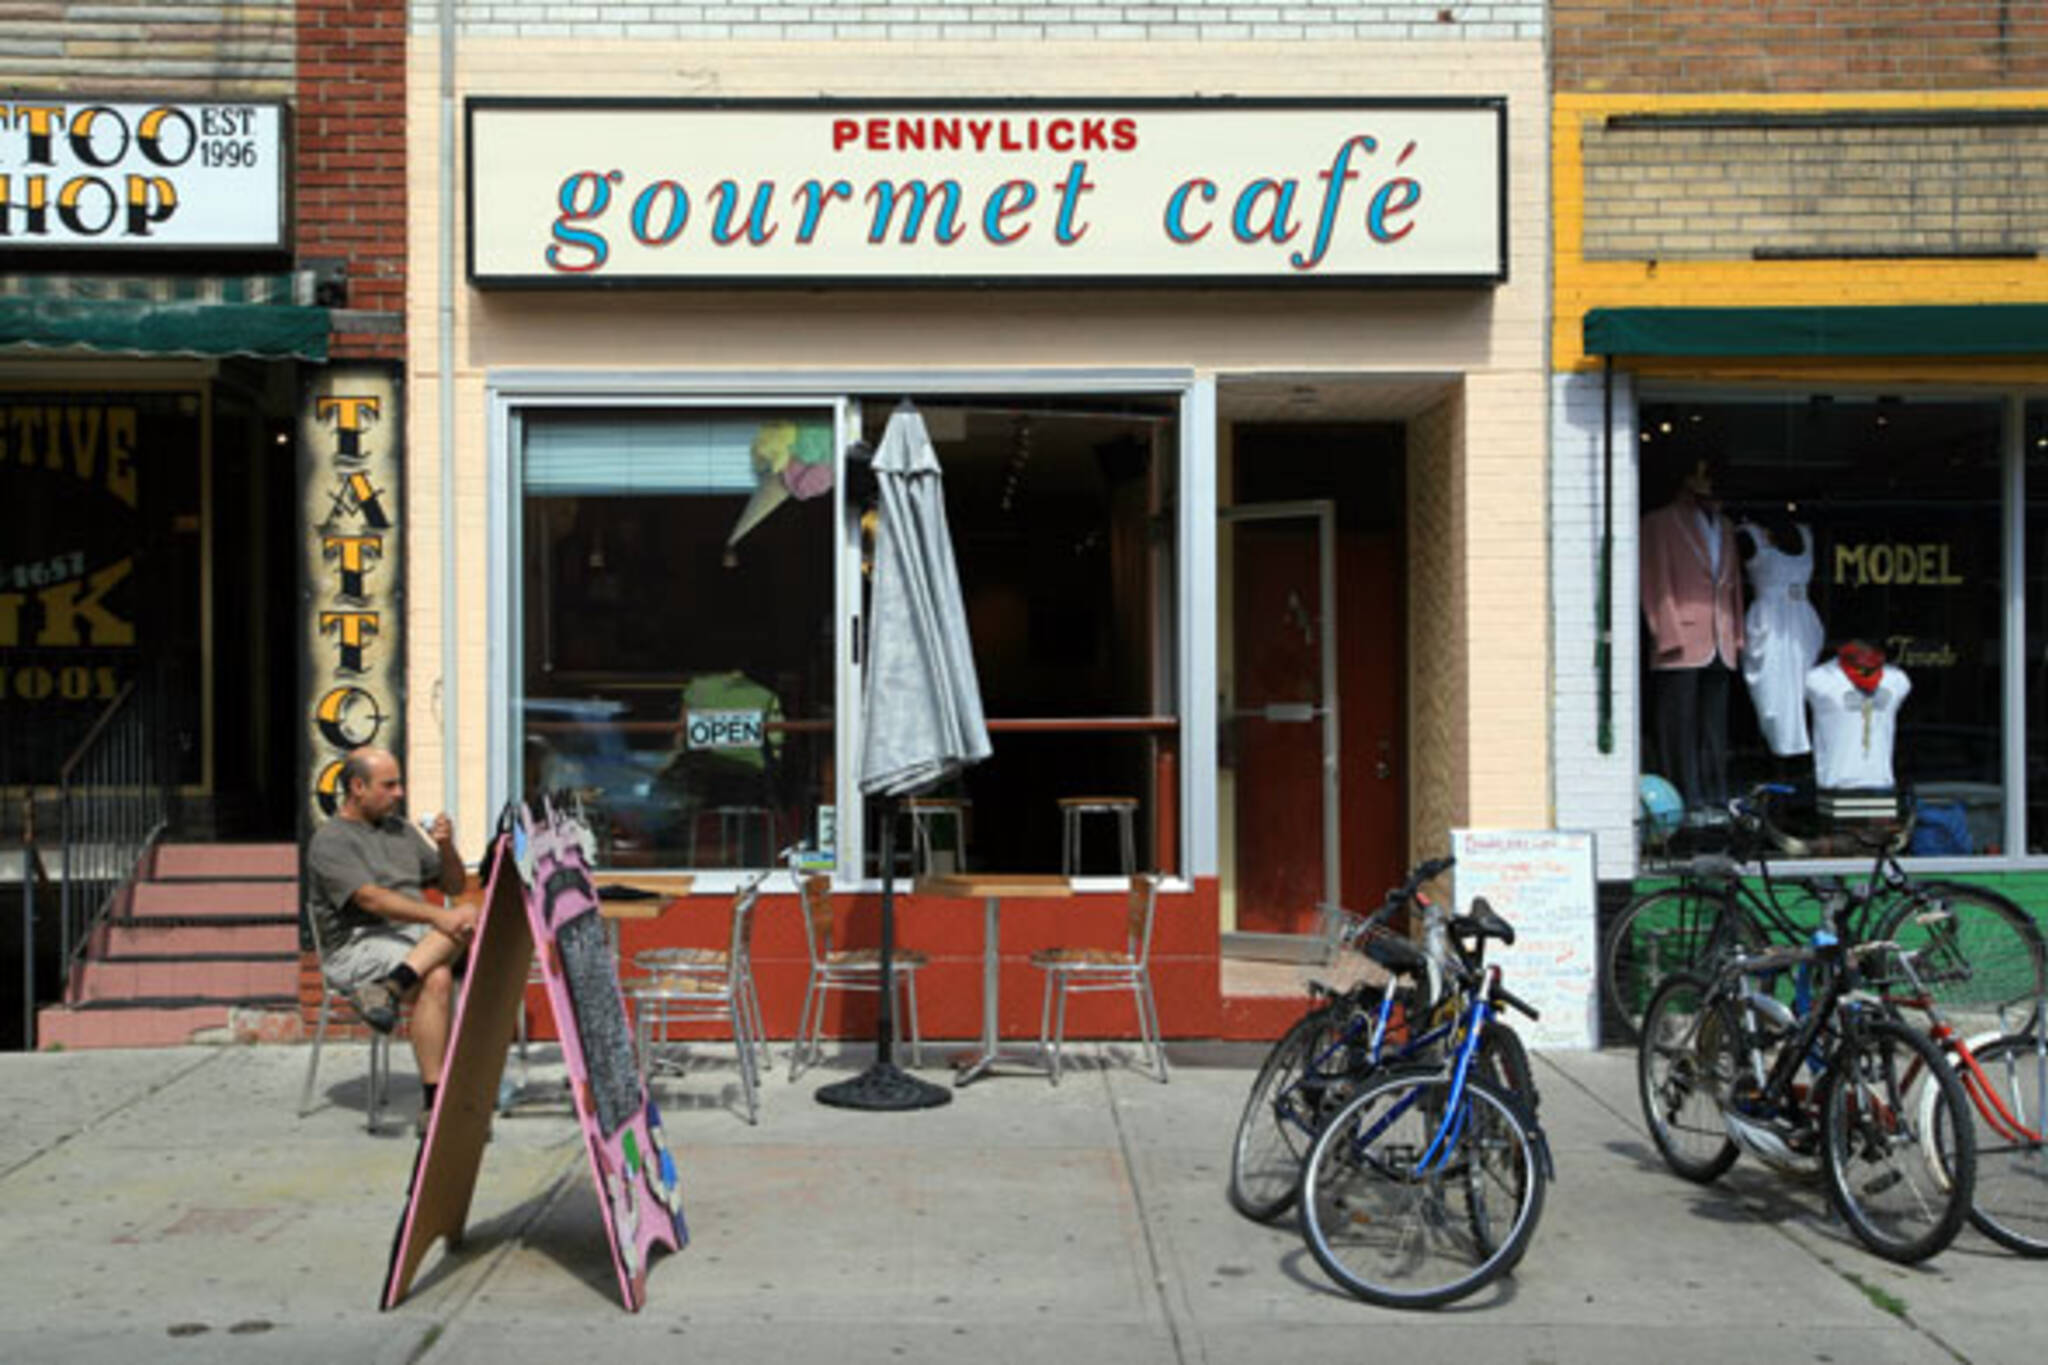 Pennylicks Gourmet Cafe